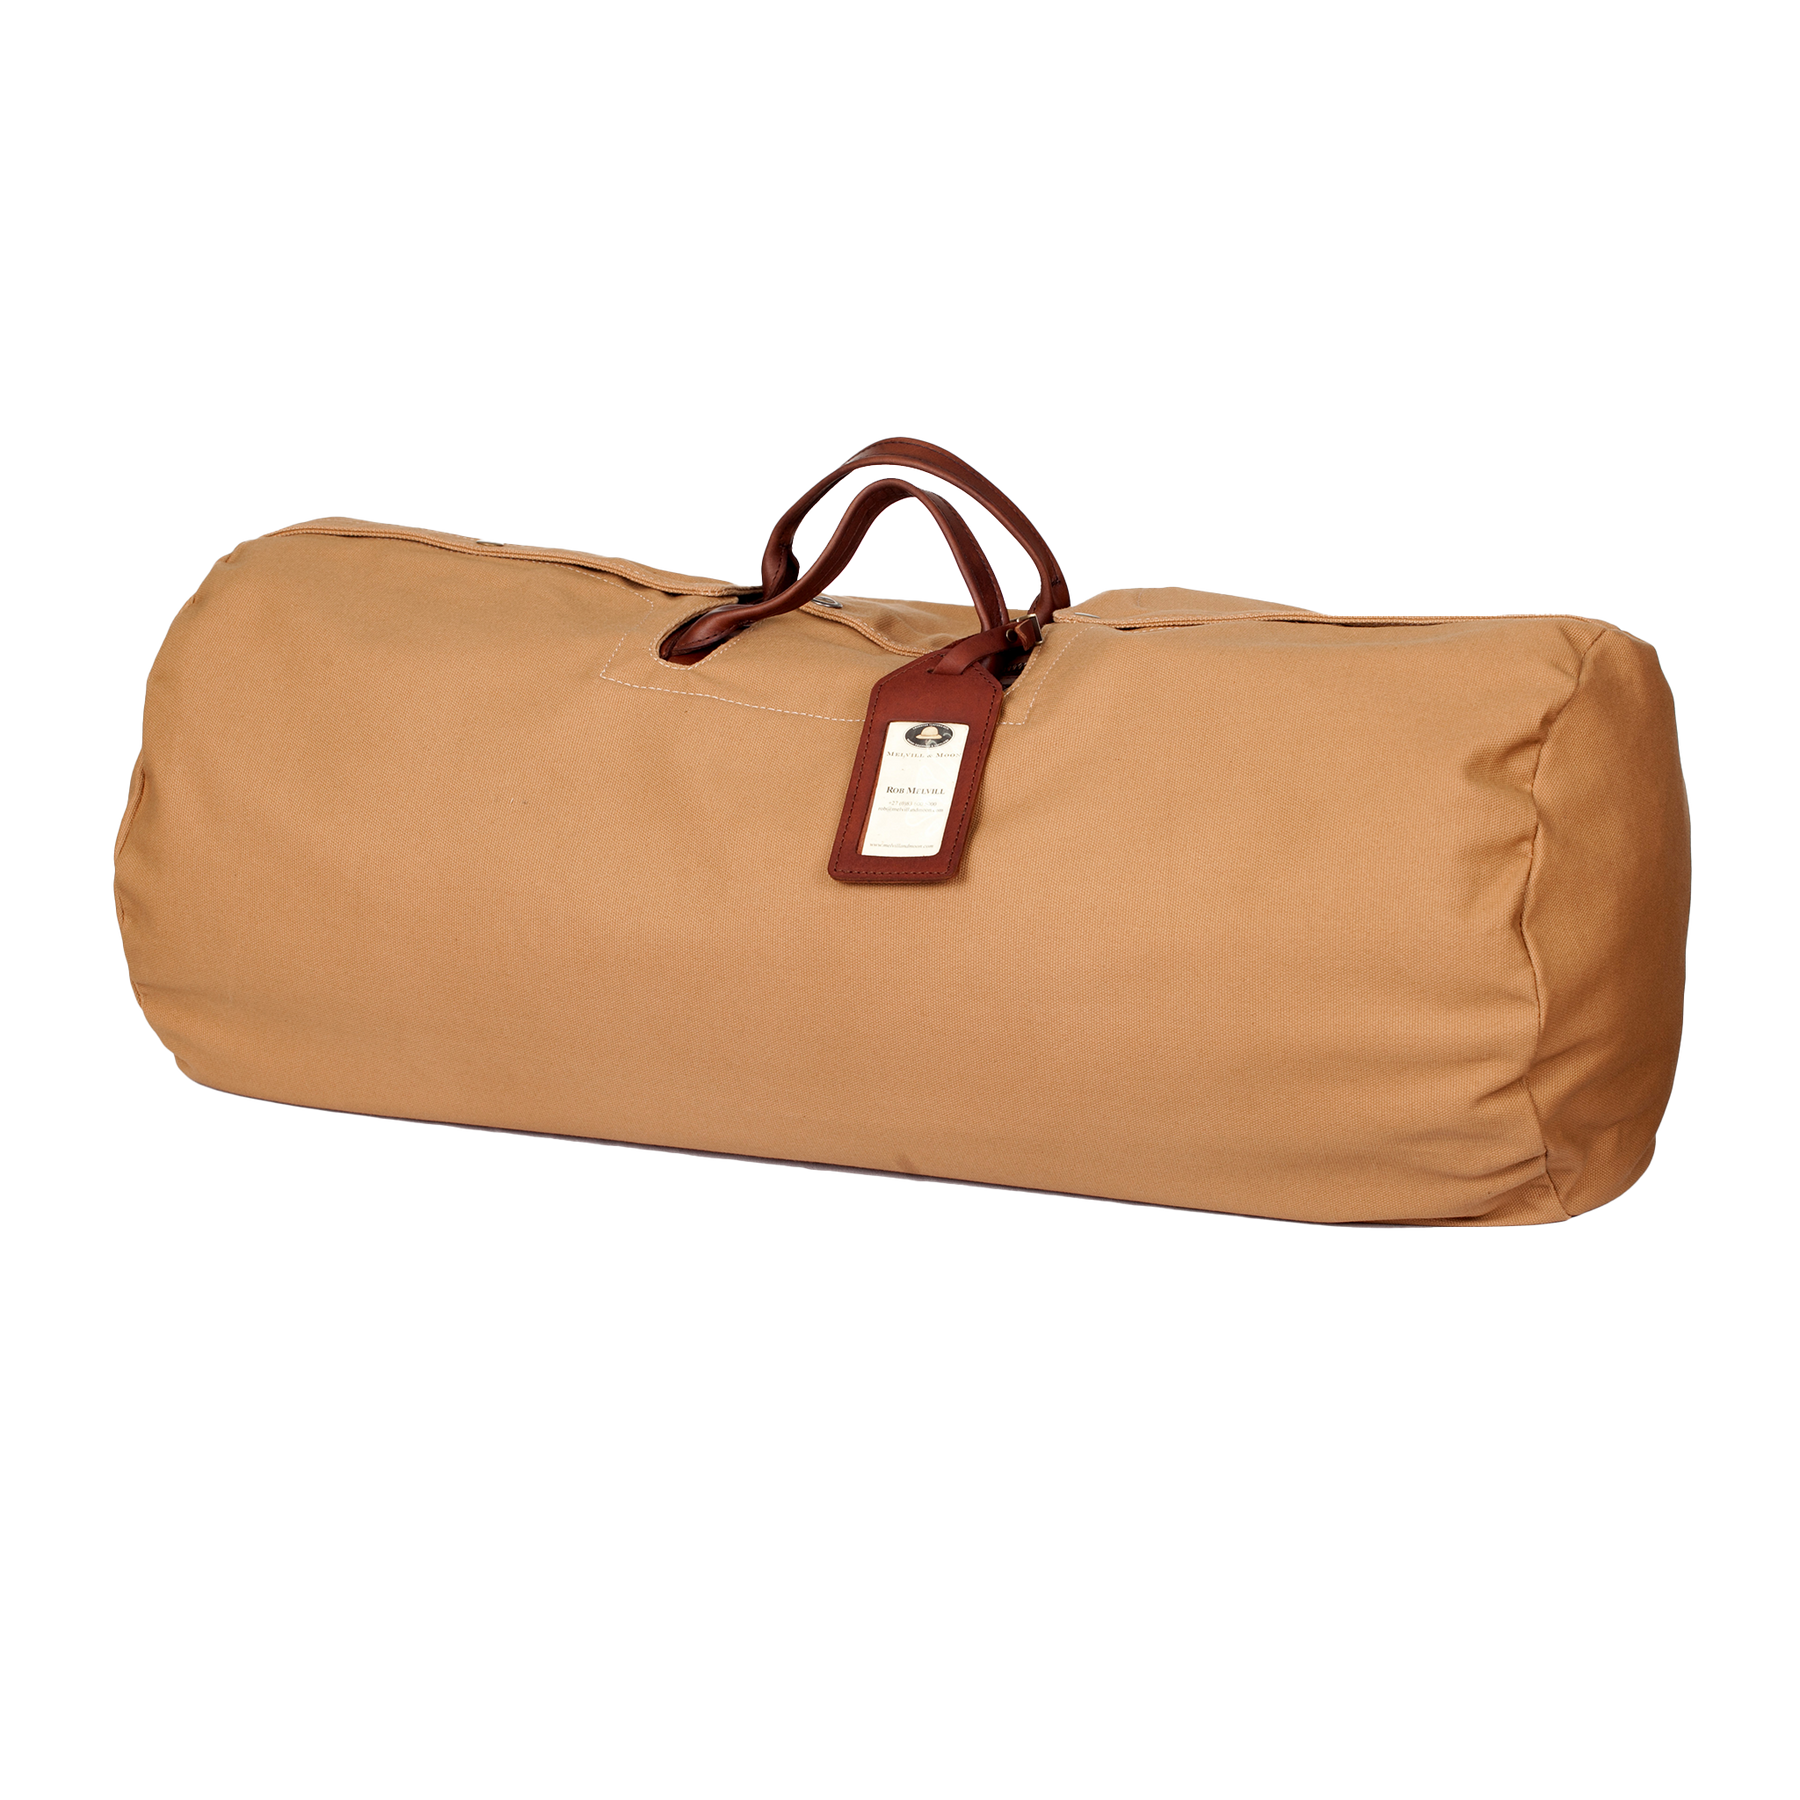 Safari Duffel Bag Cover - Medium   Melvill & Moon USA- Overland Kitted